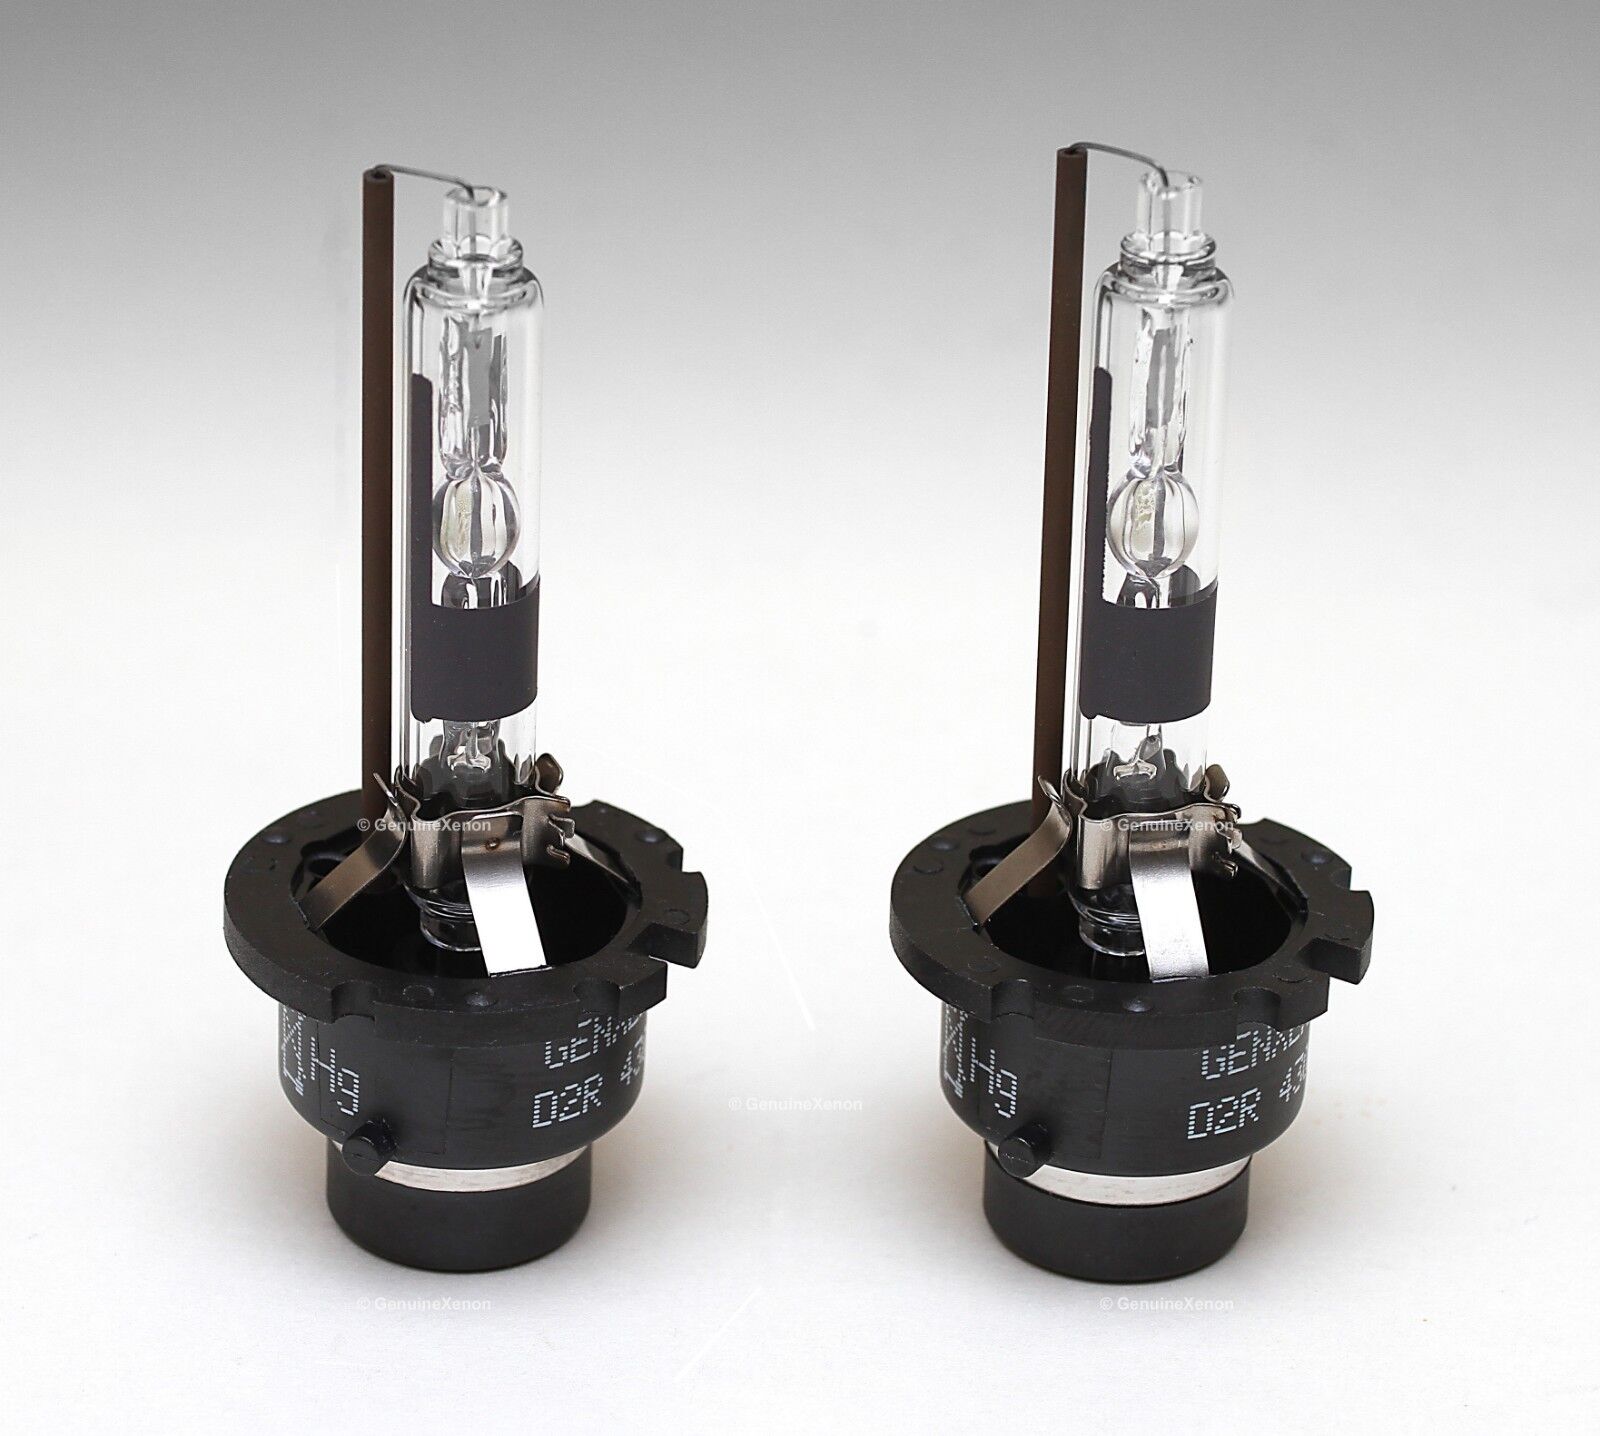 2x NEW D2R Xenon HID 85126 Replacement Bulbs Headlight Lamp 35W Bulb